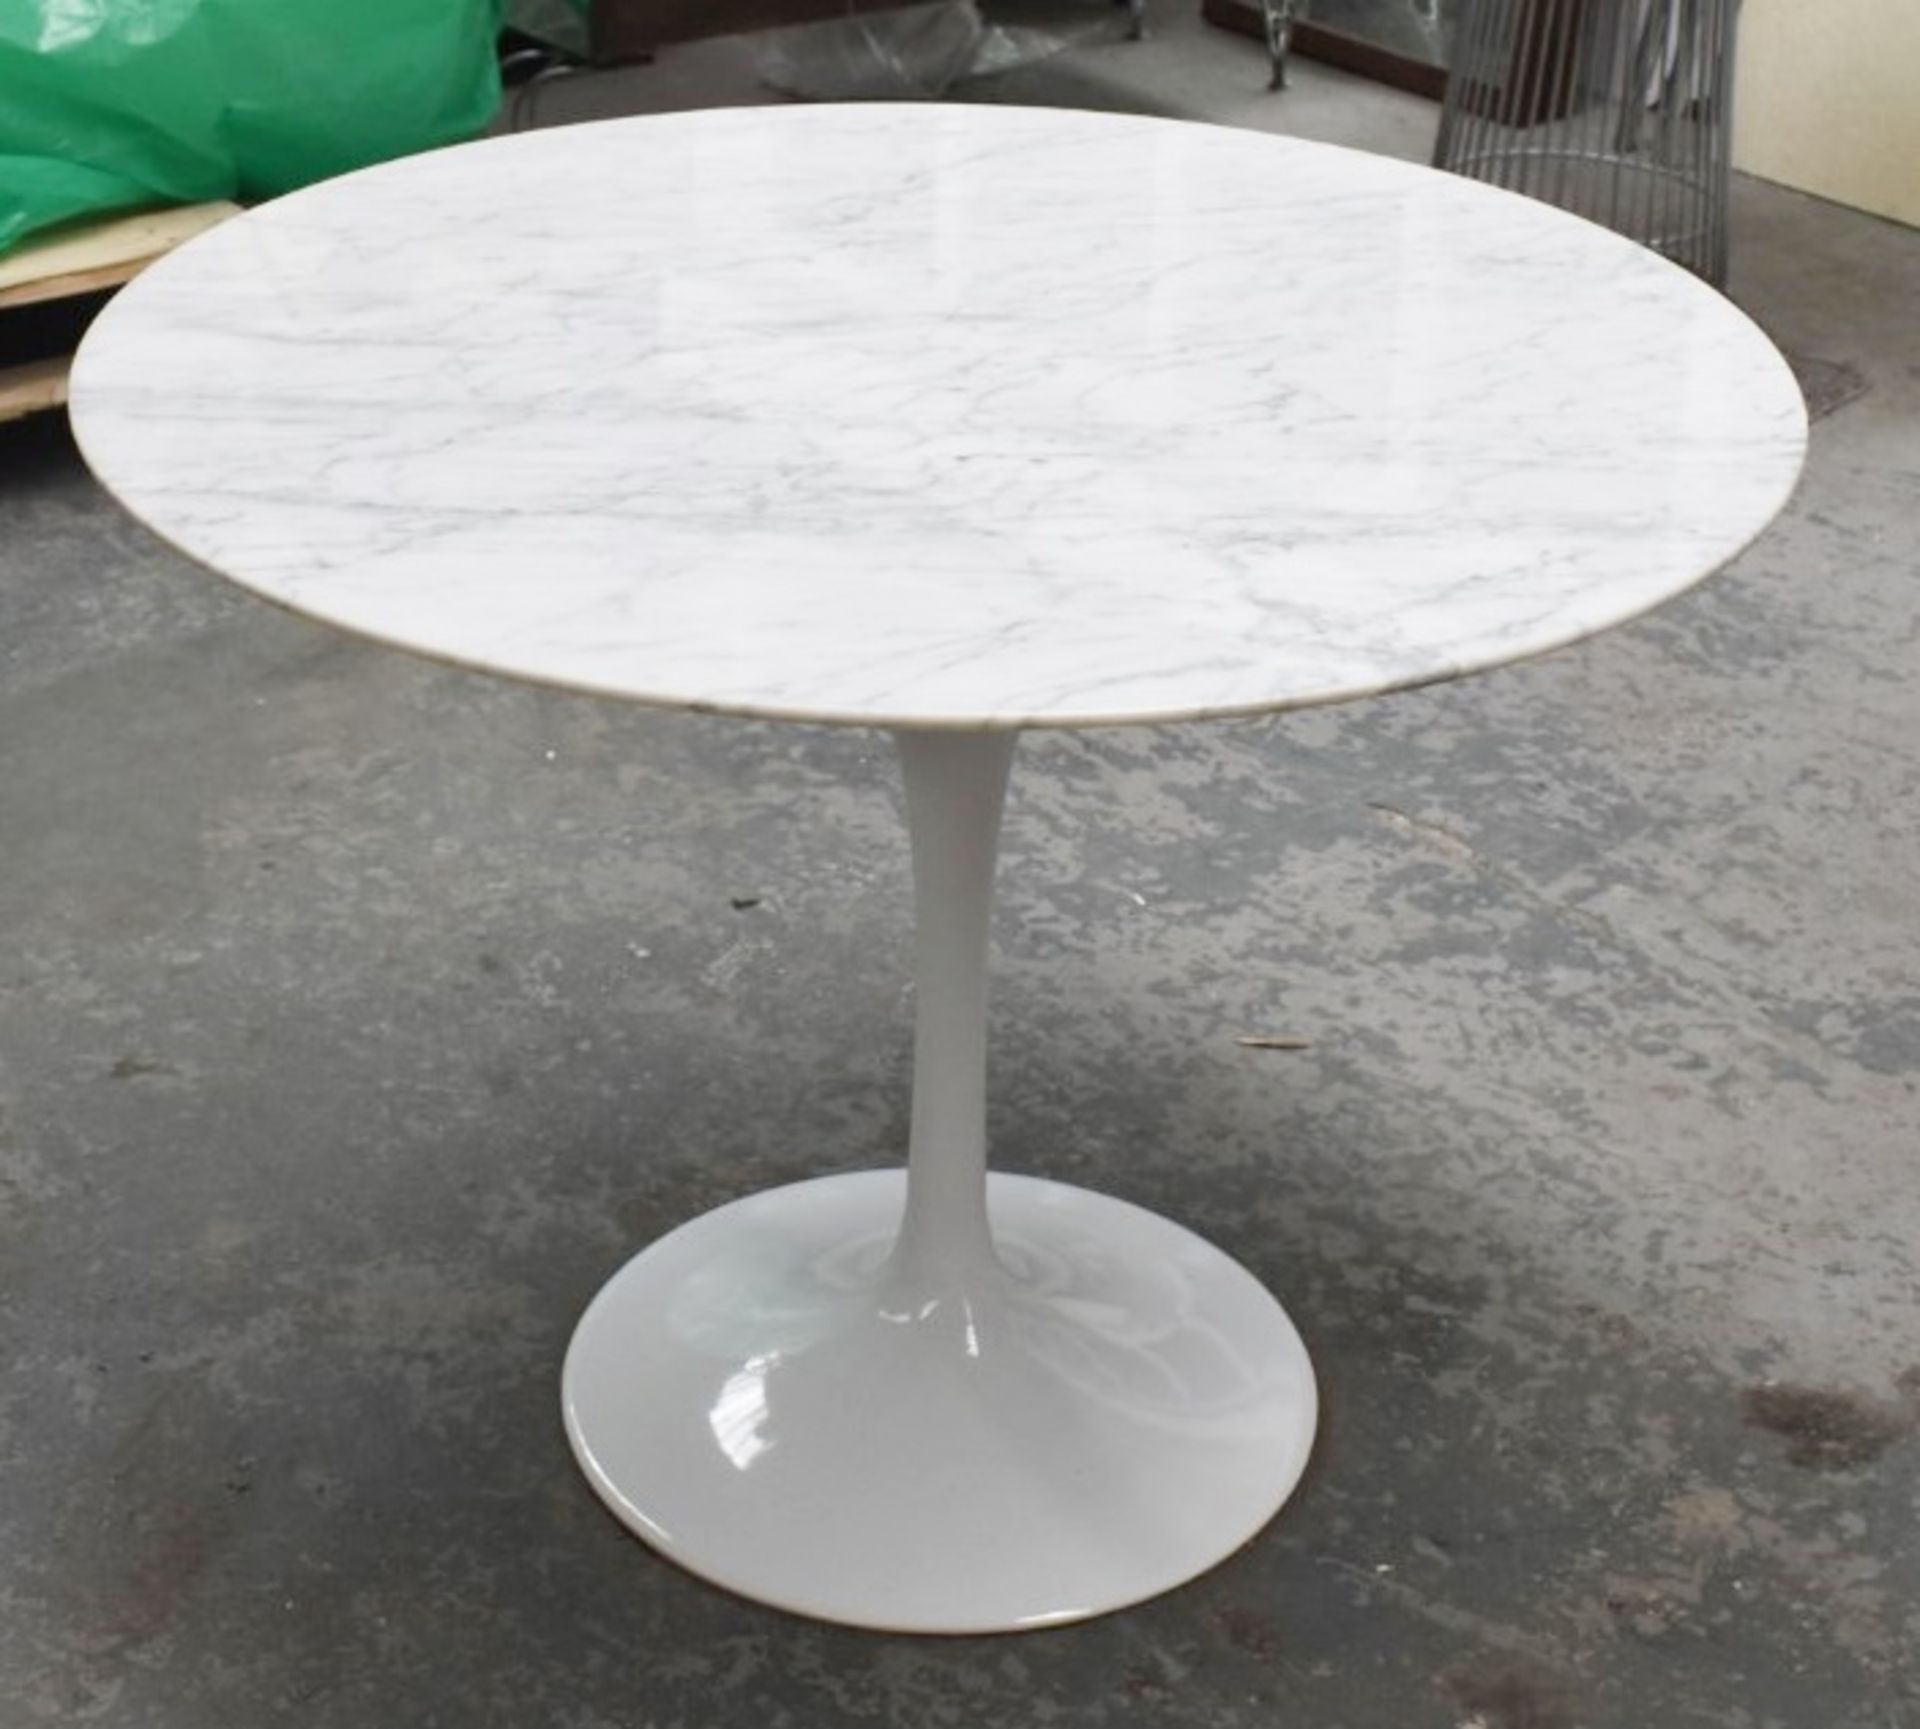 1 x Eero Saarinen Inspired Carrara Marble Tulip 100cm Coffee Table - 1950's Reproduction Oval Dining